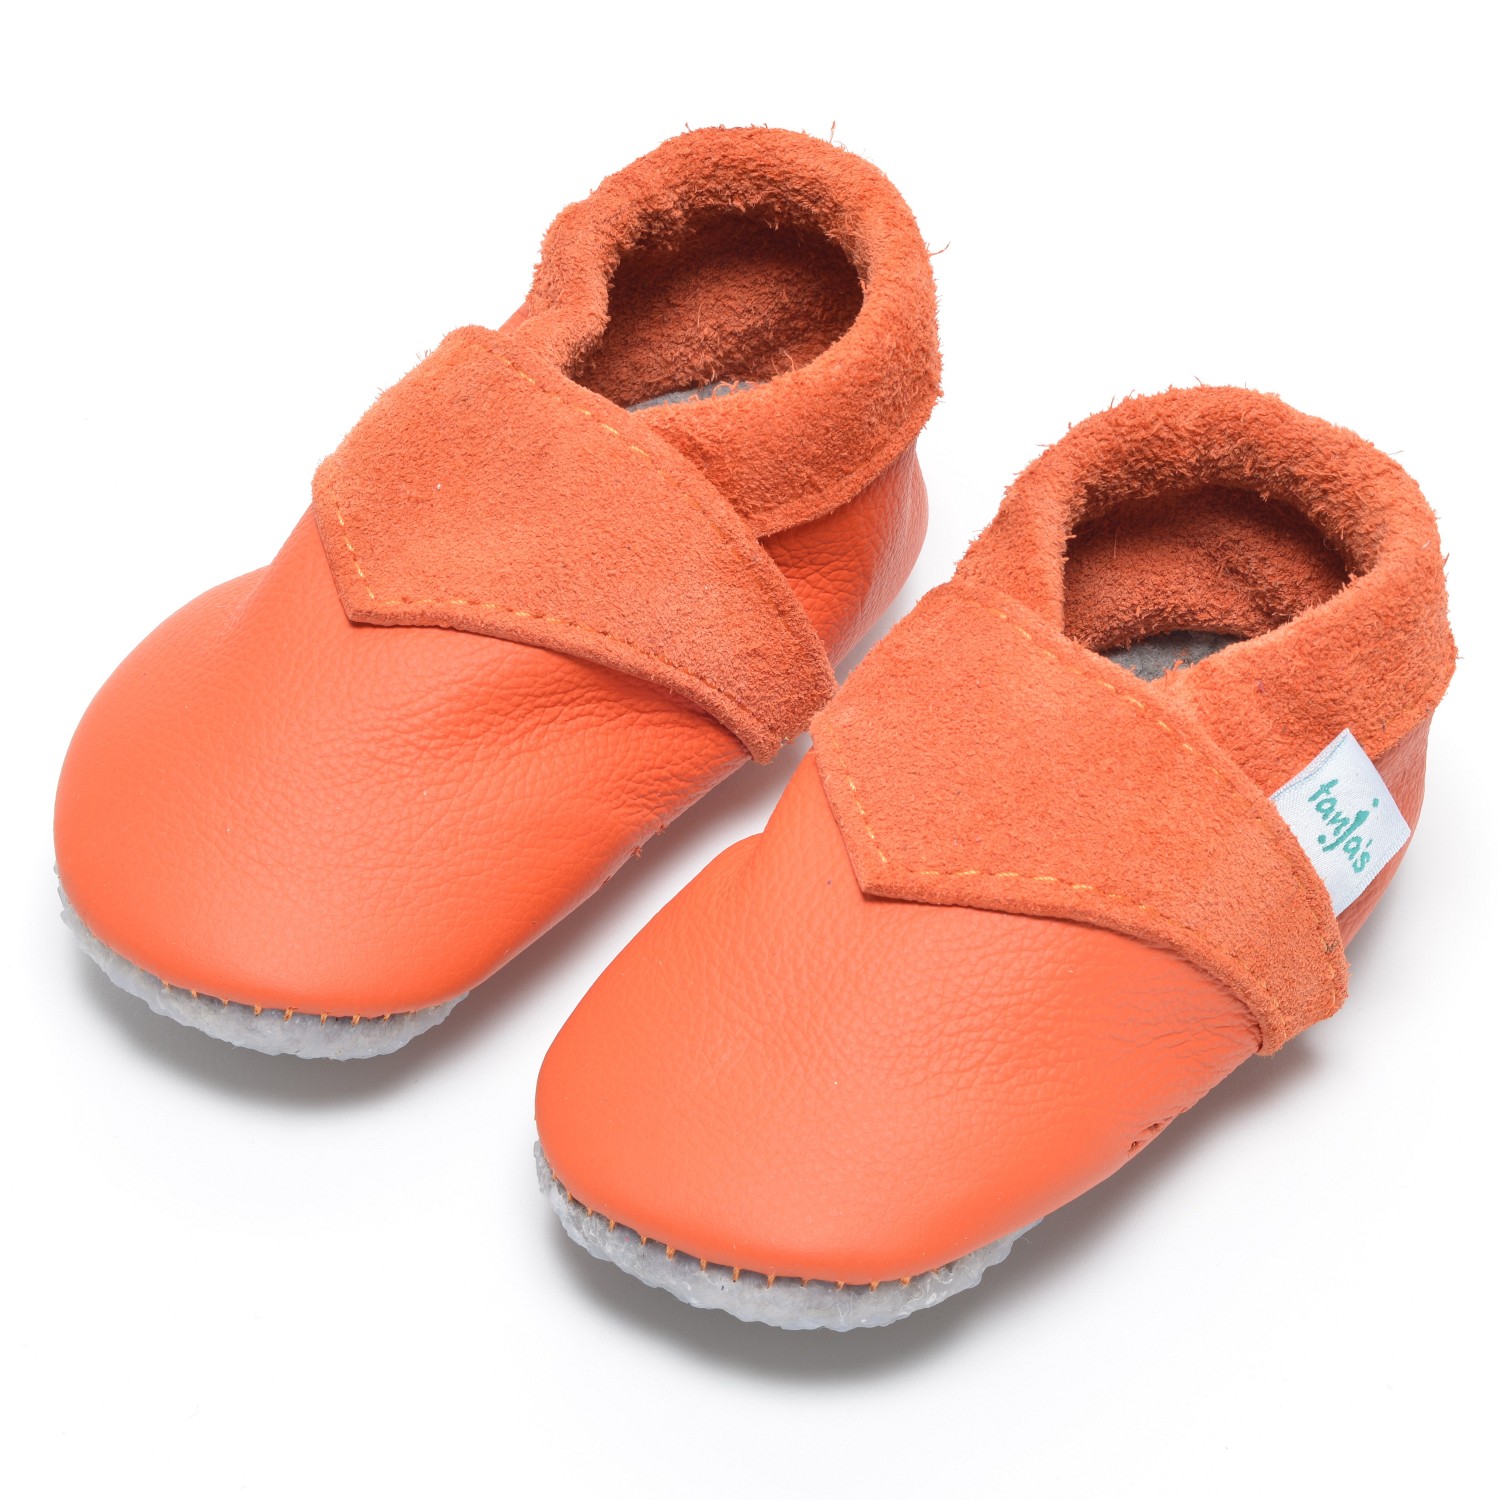 Baby-Lederschuhe, orange